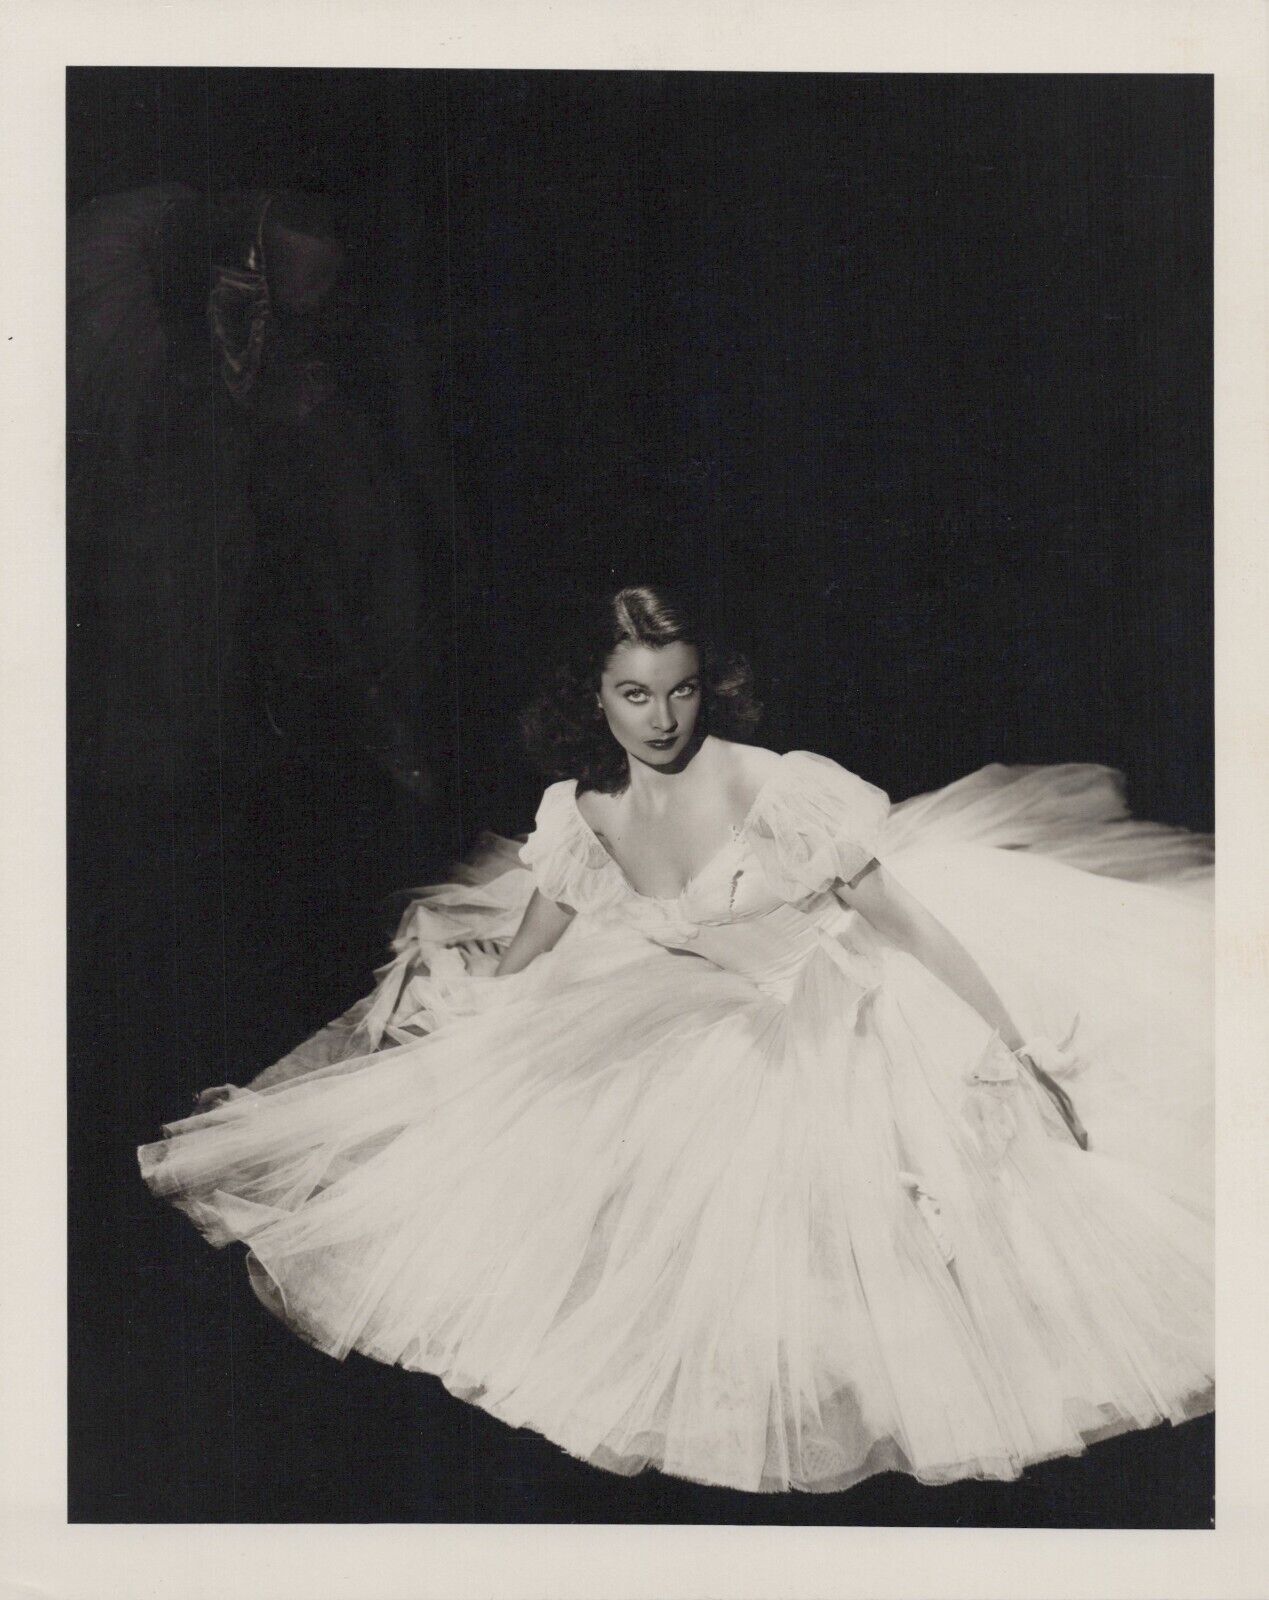 HOLLYWOOD BEAUTY Vivien Leigh WILLINGER DBW STUNNING PORTRAIT 1940s Photo 424